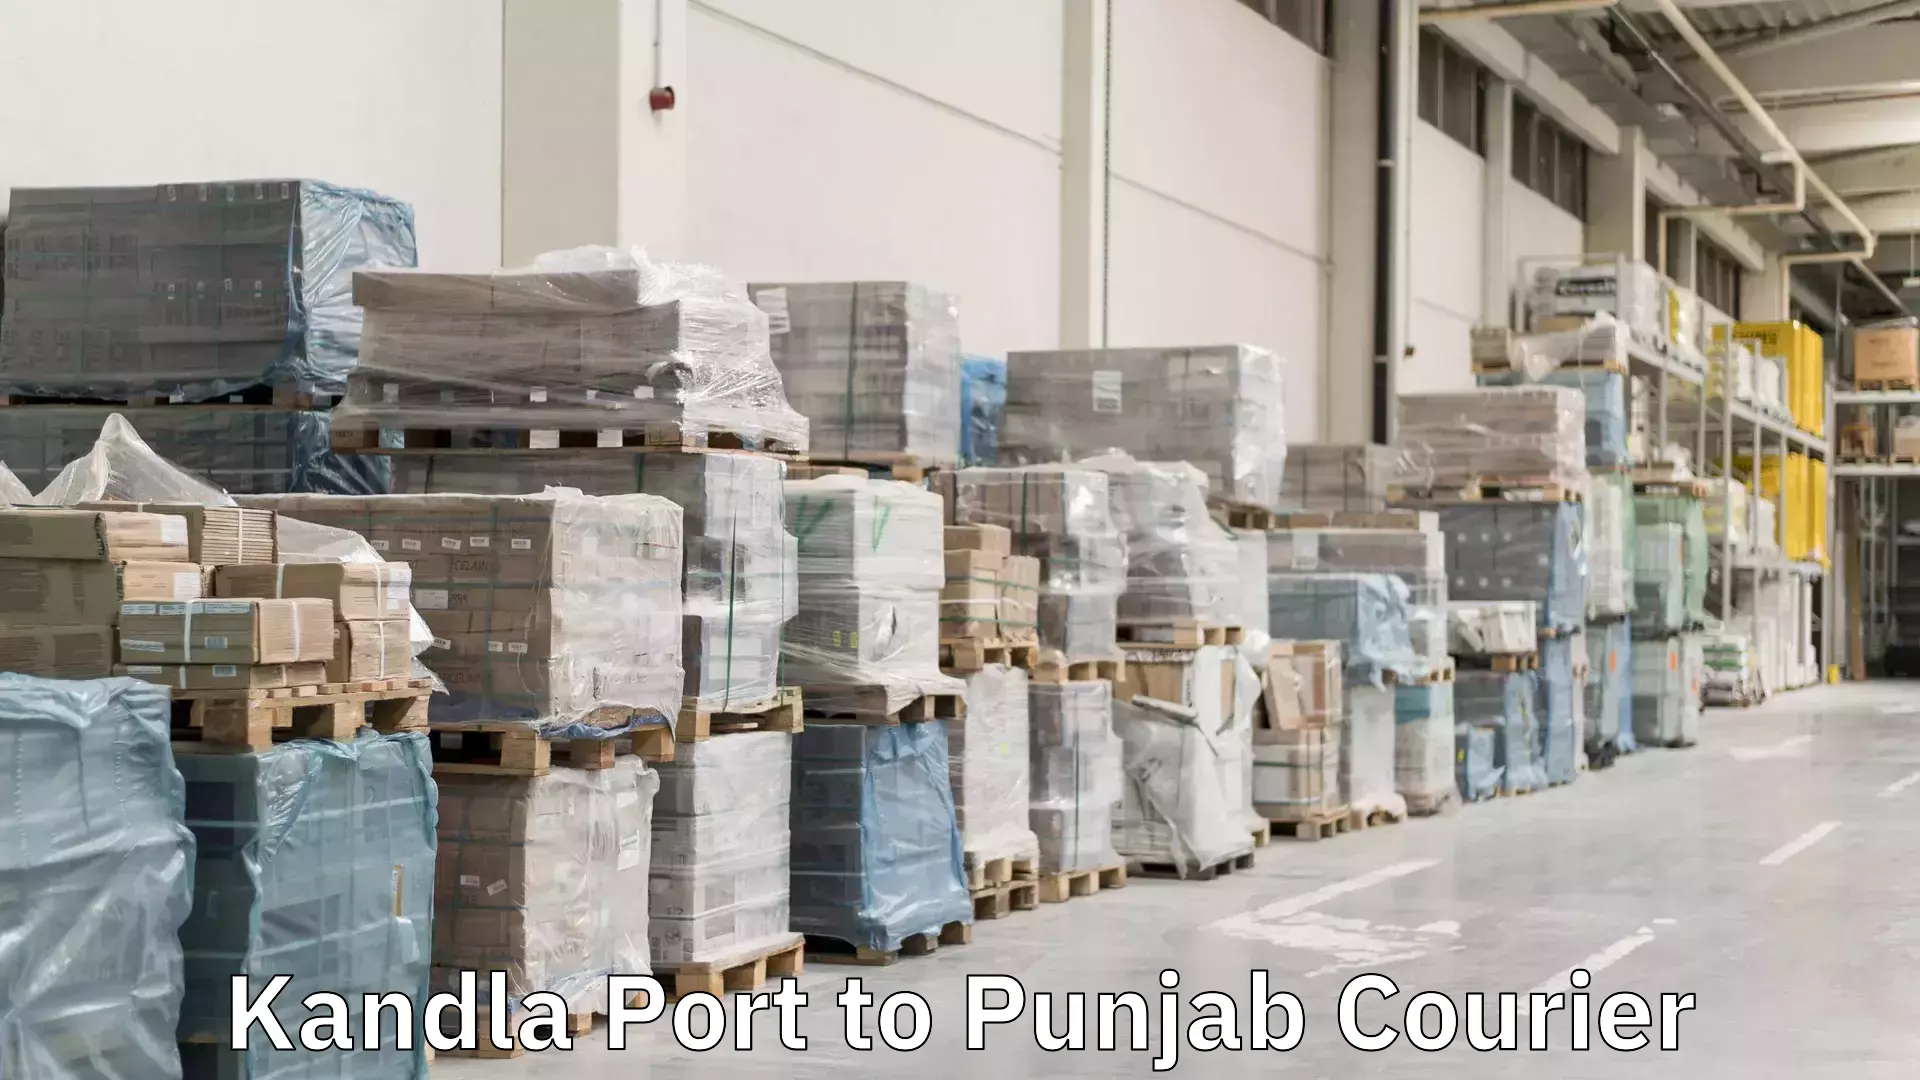 Efficient order fulfillment Kandla Port to Punjab